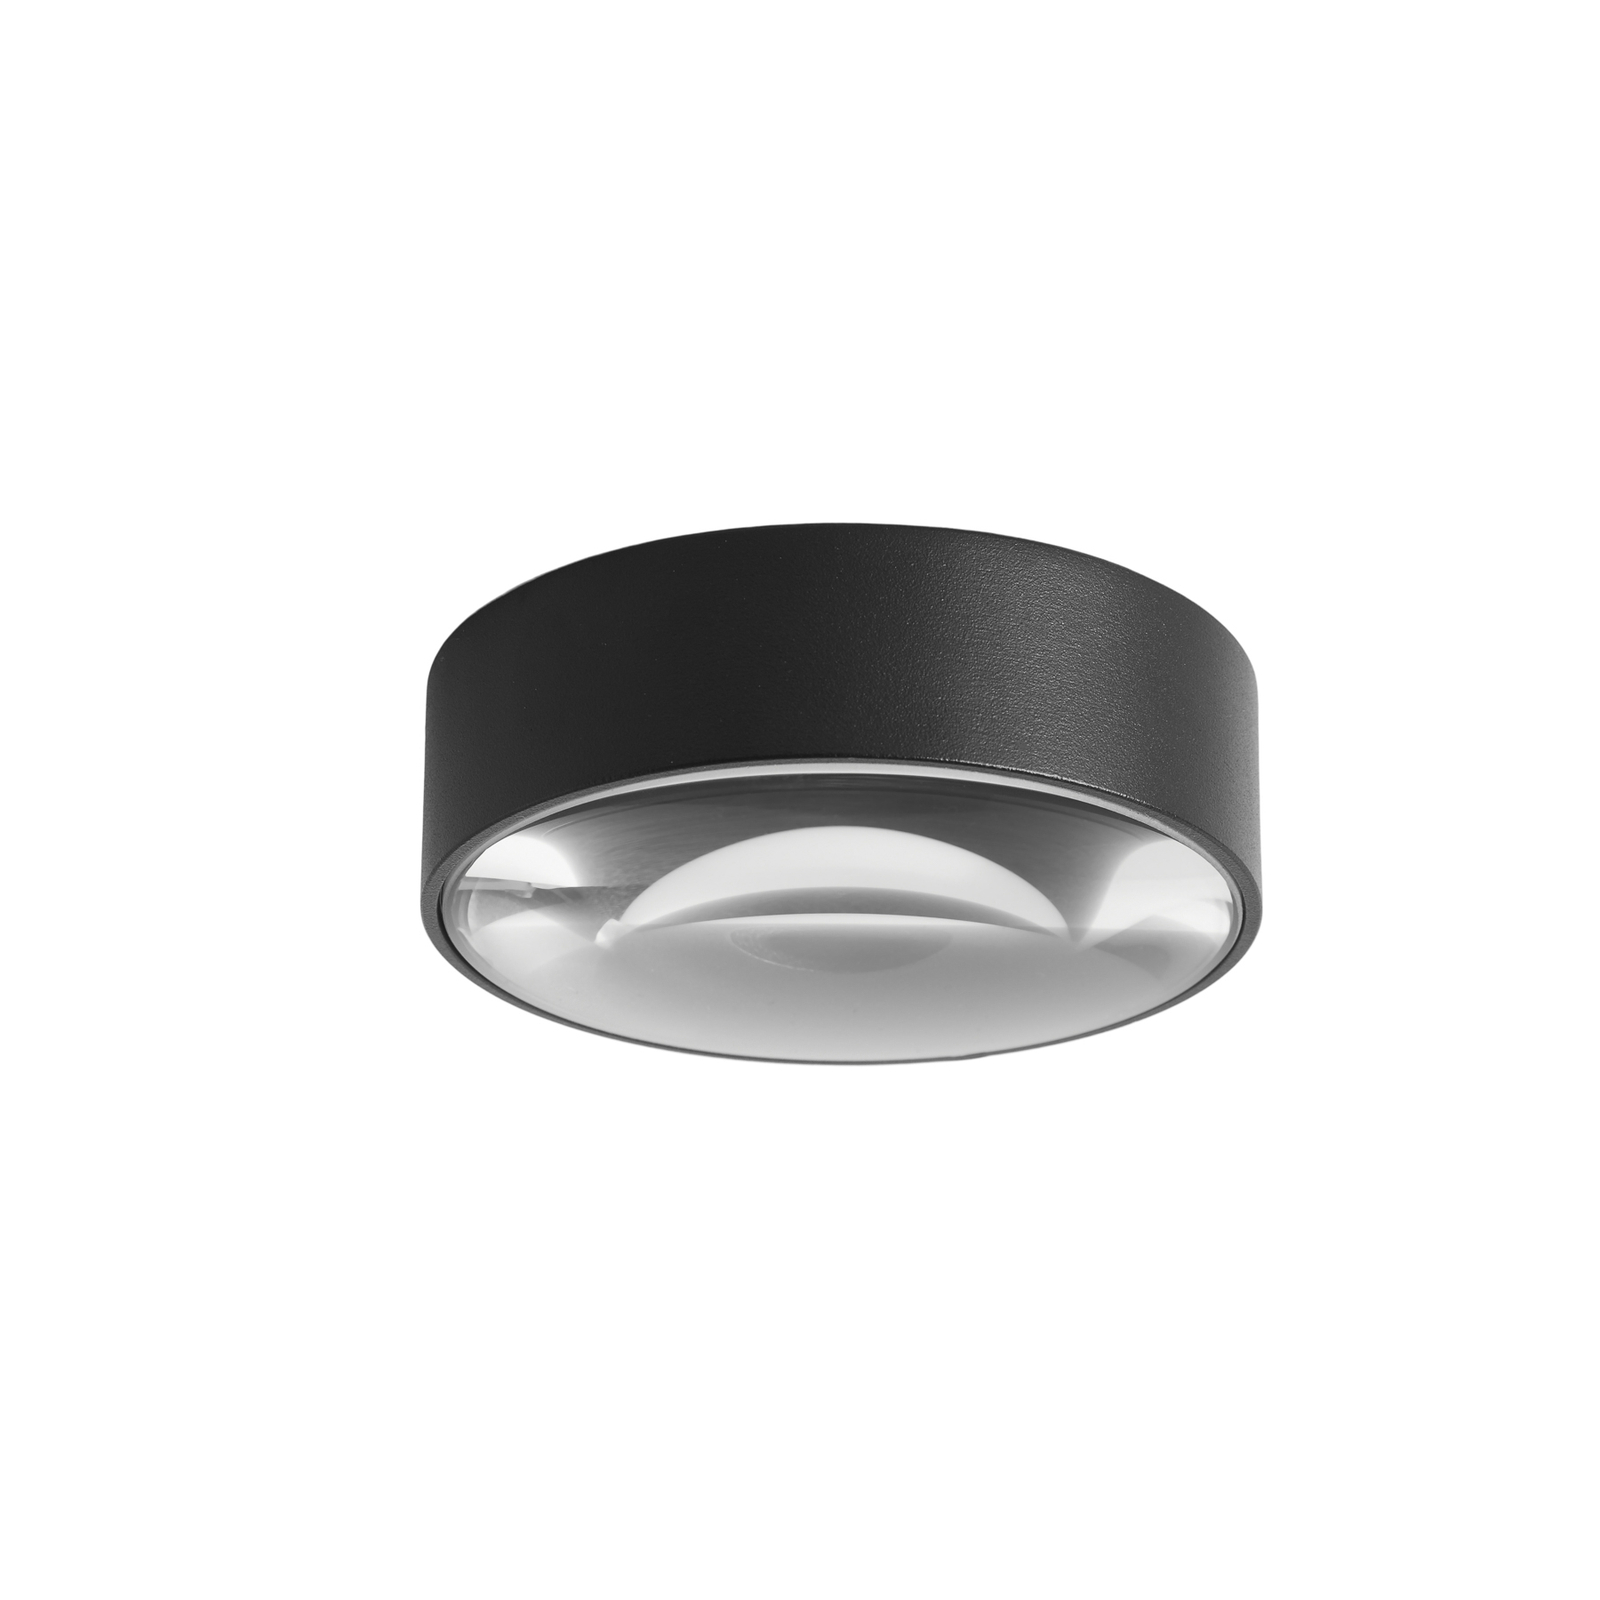 LOOM DESIGN Sif LED ceiling light IP65 black